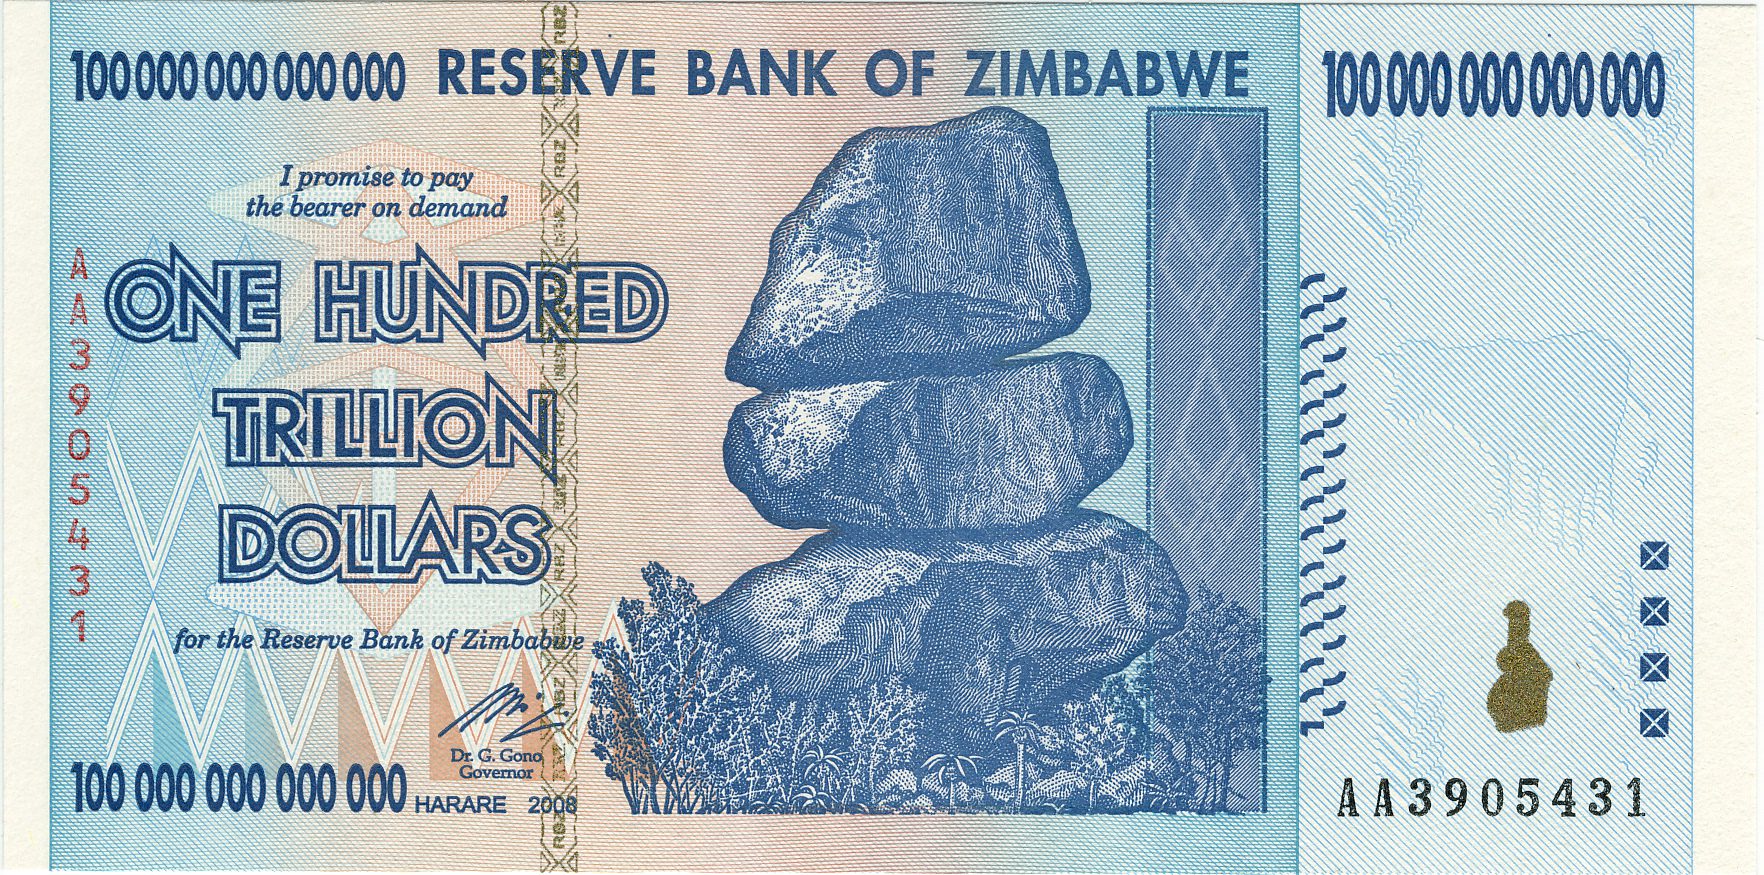 Zimbabwean banknote